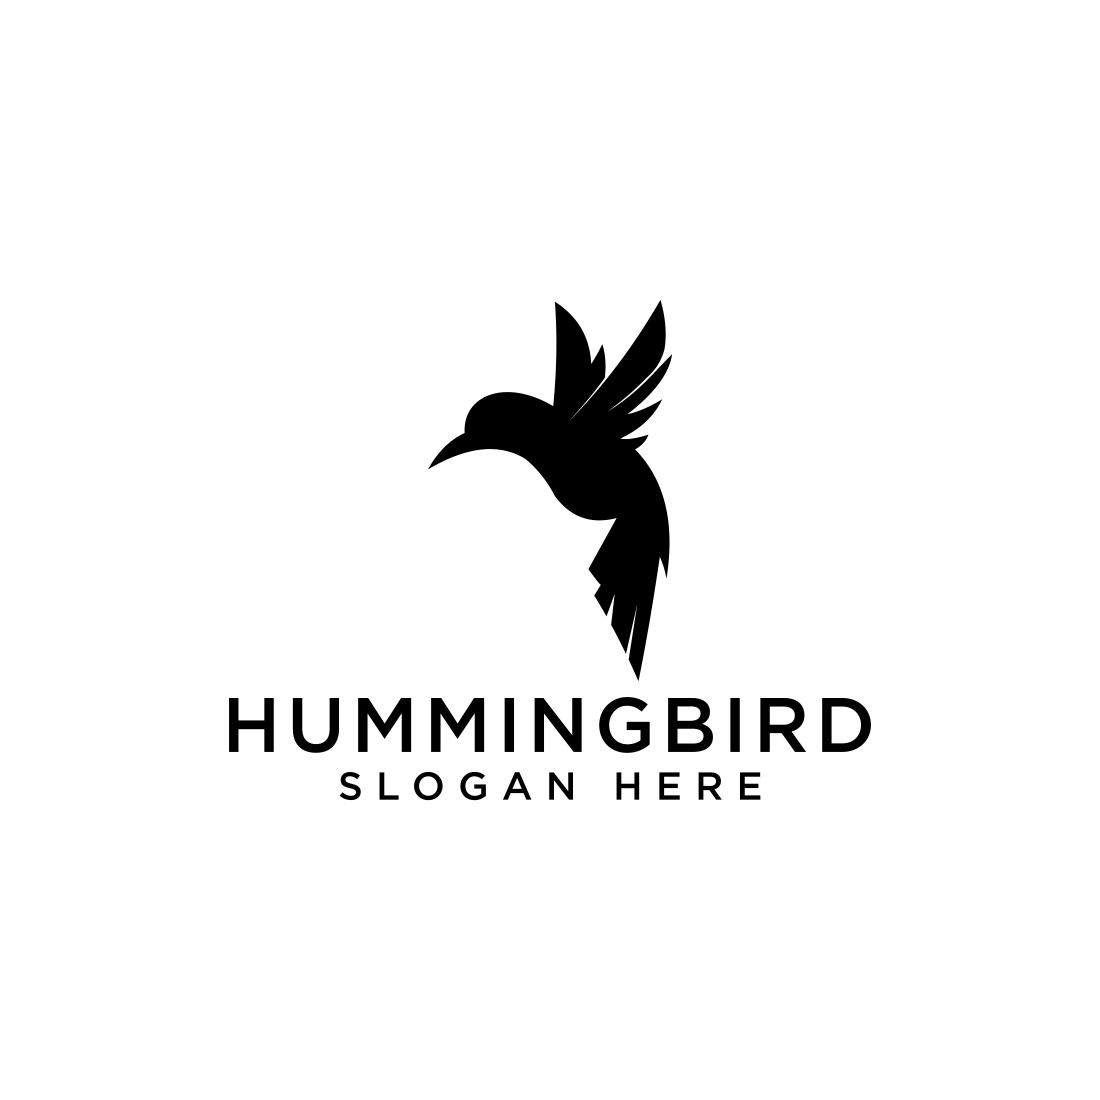 hummingbird logo vector animal silhouette preview image.